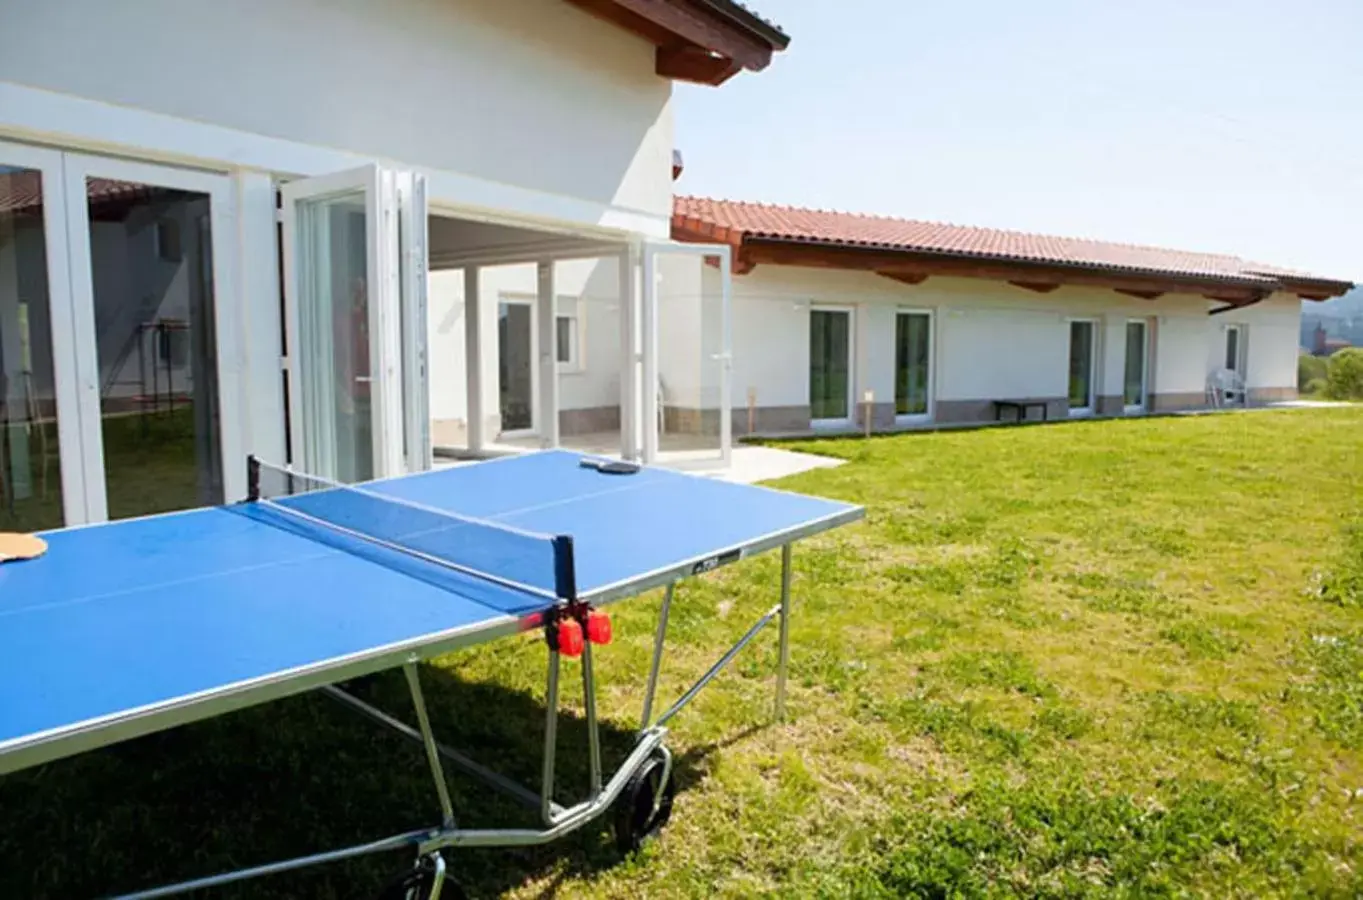 Off site, Table Tennis in Casa Rural Txokoetxe